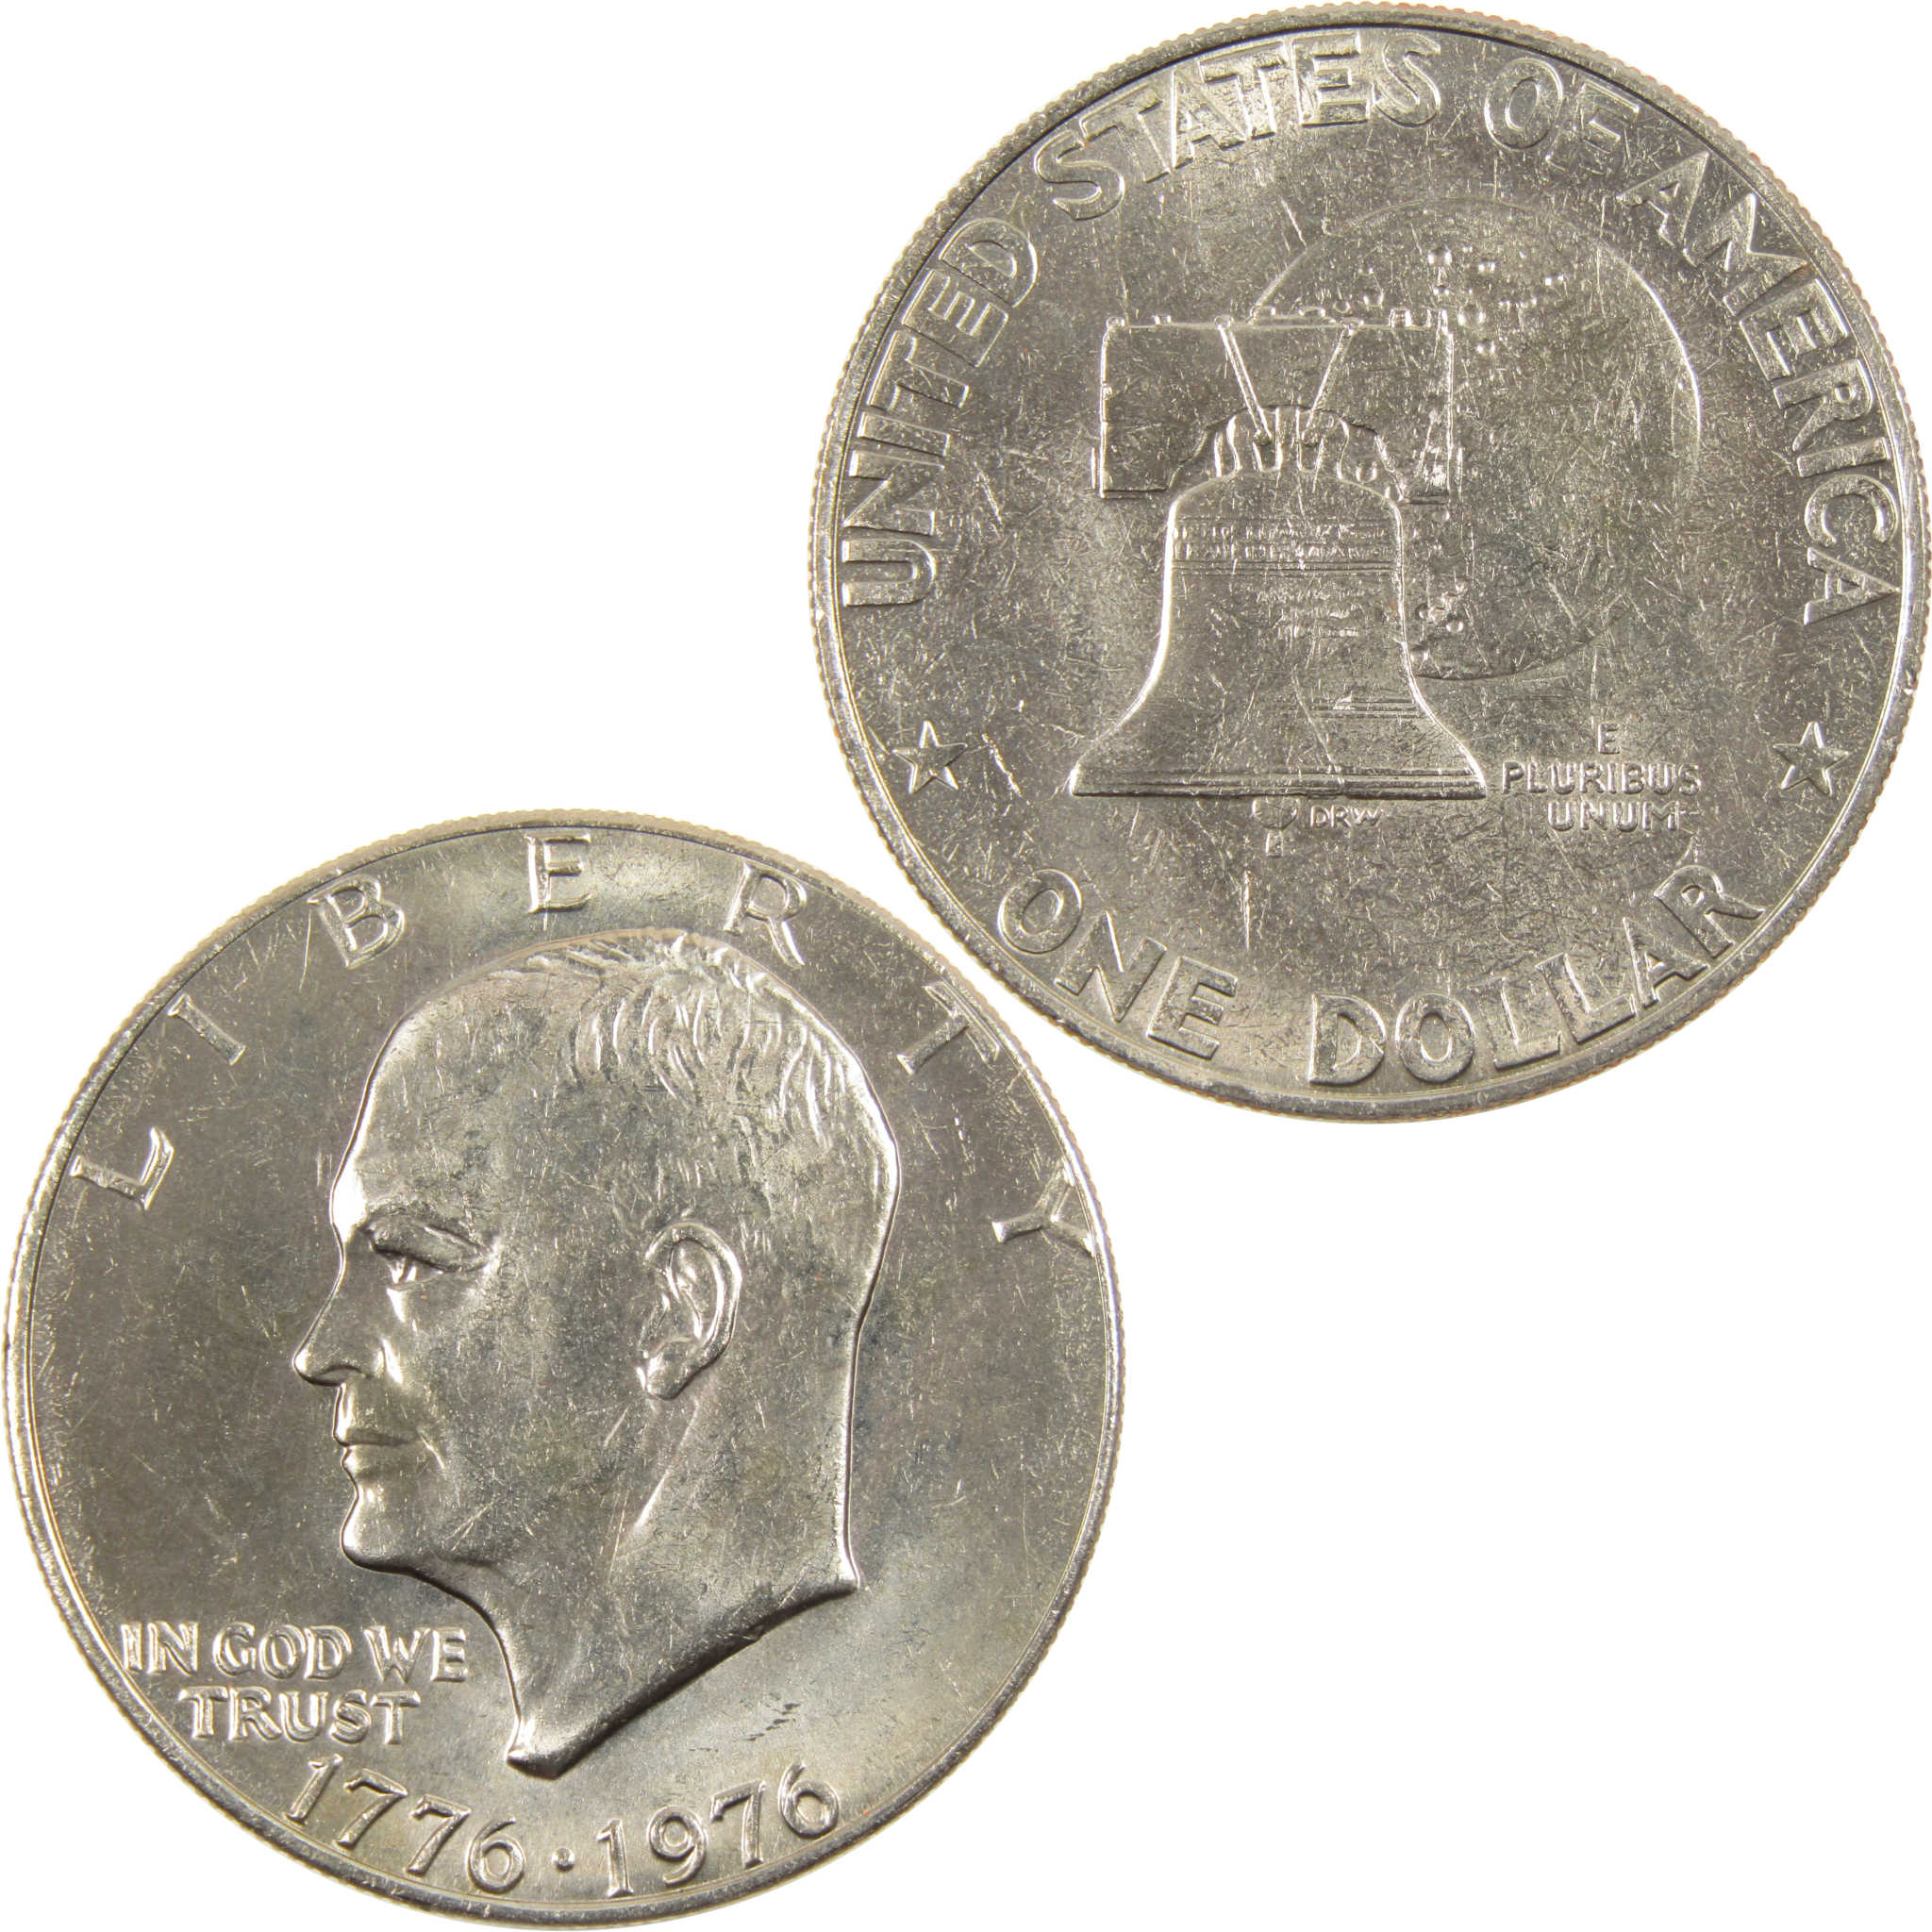 1976 Type 1 Eisenhower Bicentennial Dollar BU Uncirculated Clad IKE $1